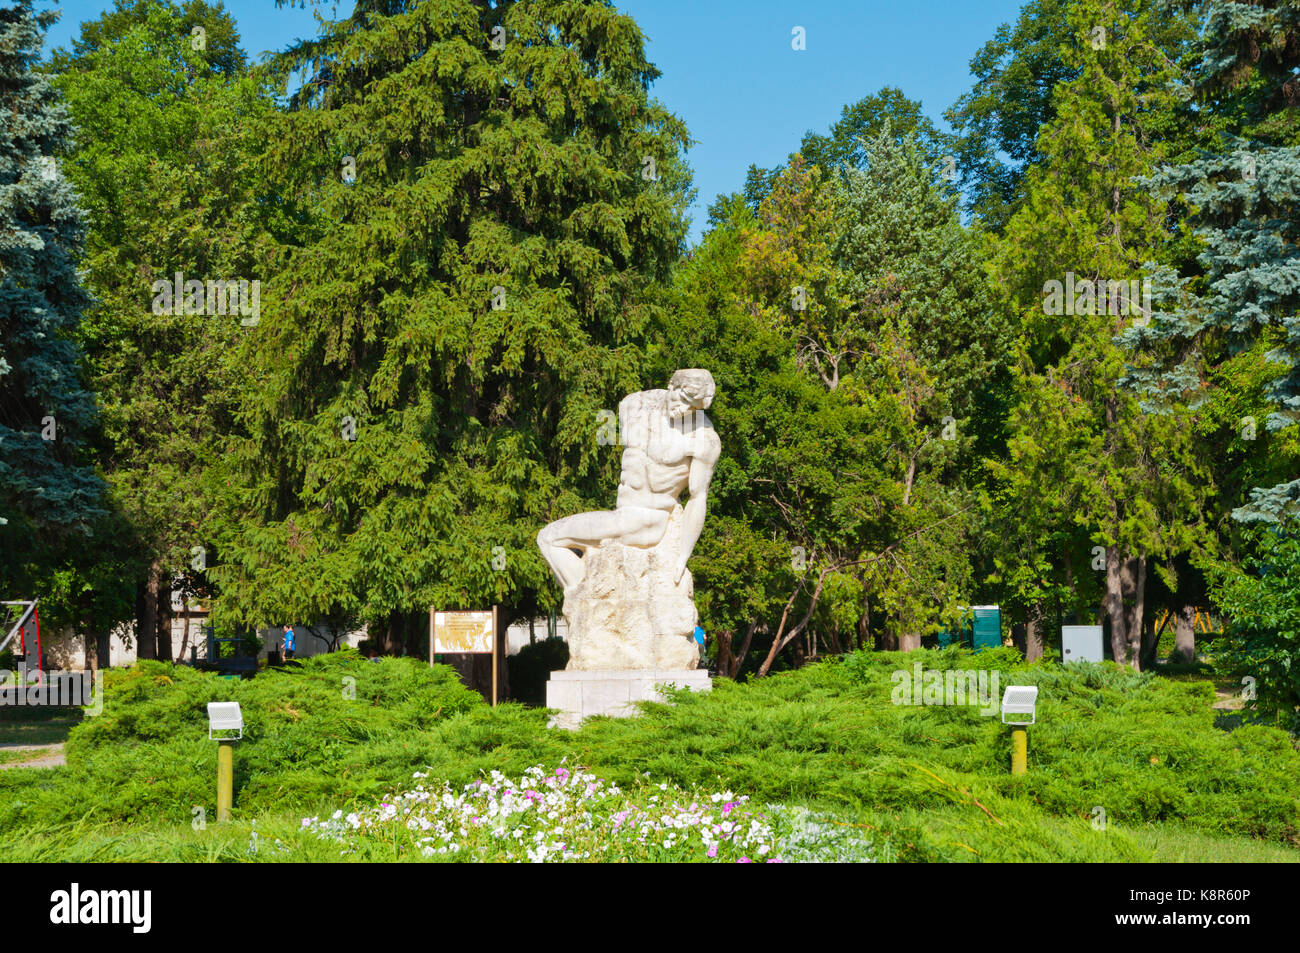 A Giant, by Frederic Storck, Parcul Carol, Bucharest, Romania Stock Photo